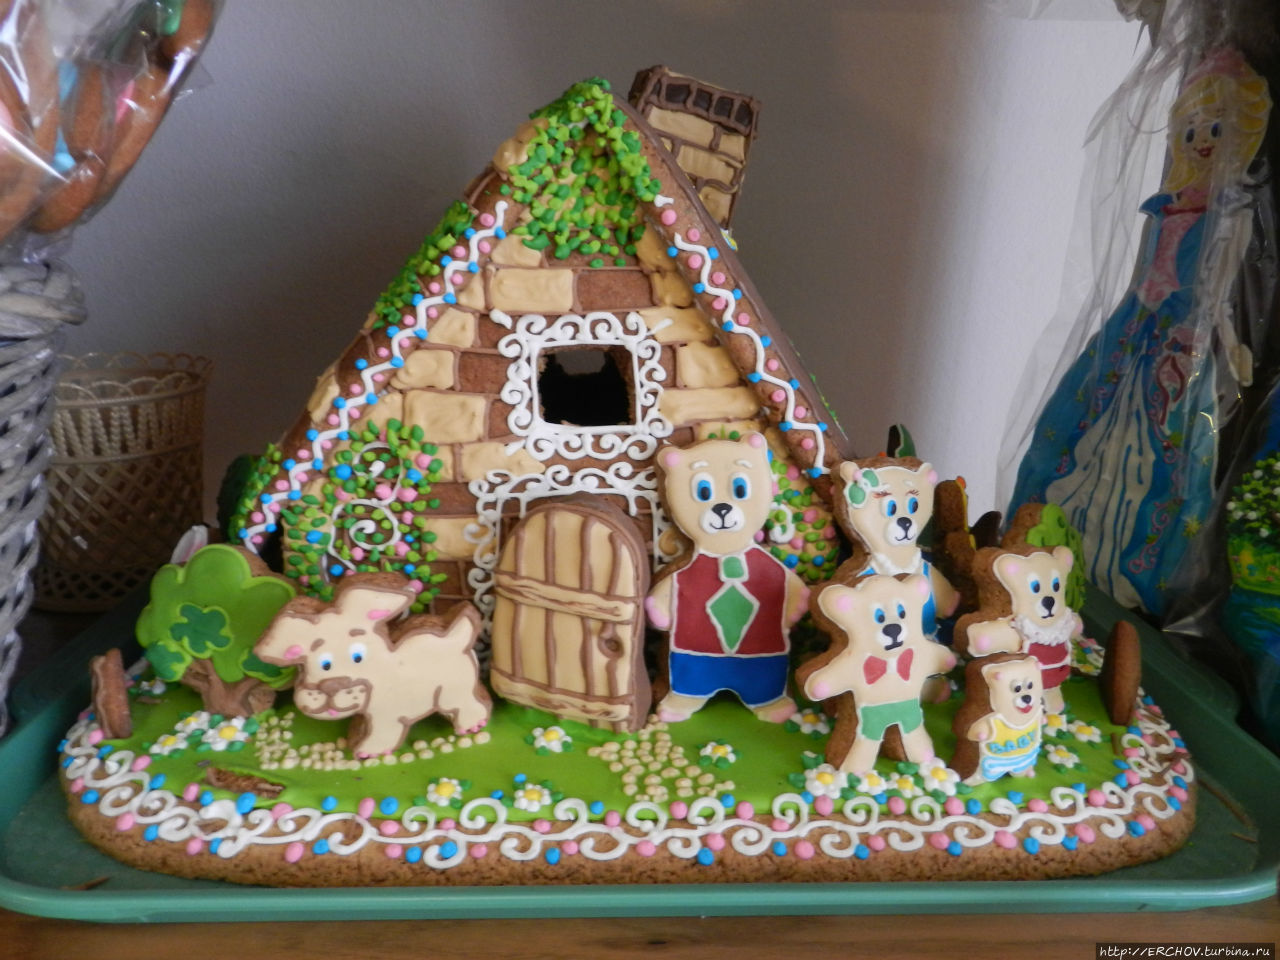 Музей пряника / Museum of gingerbread